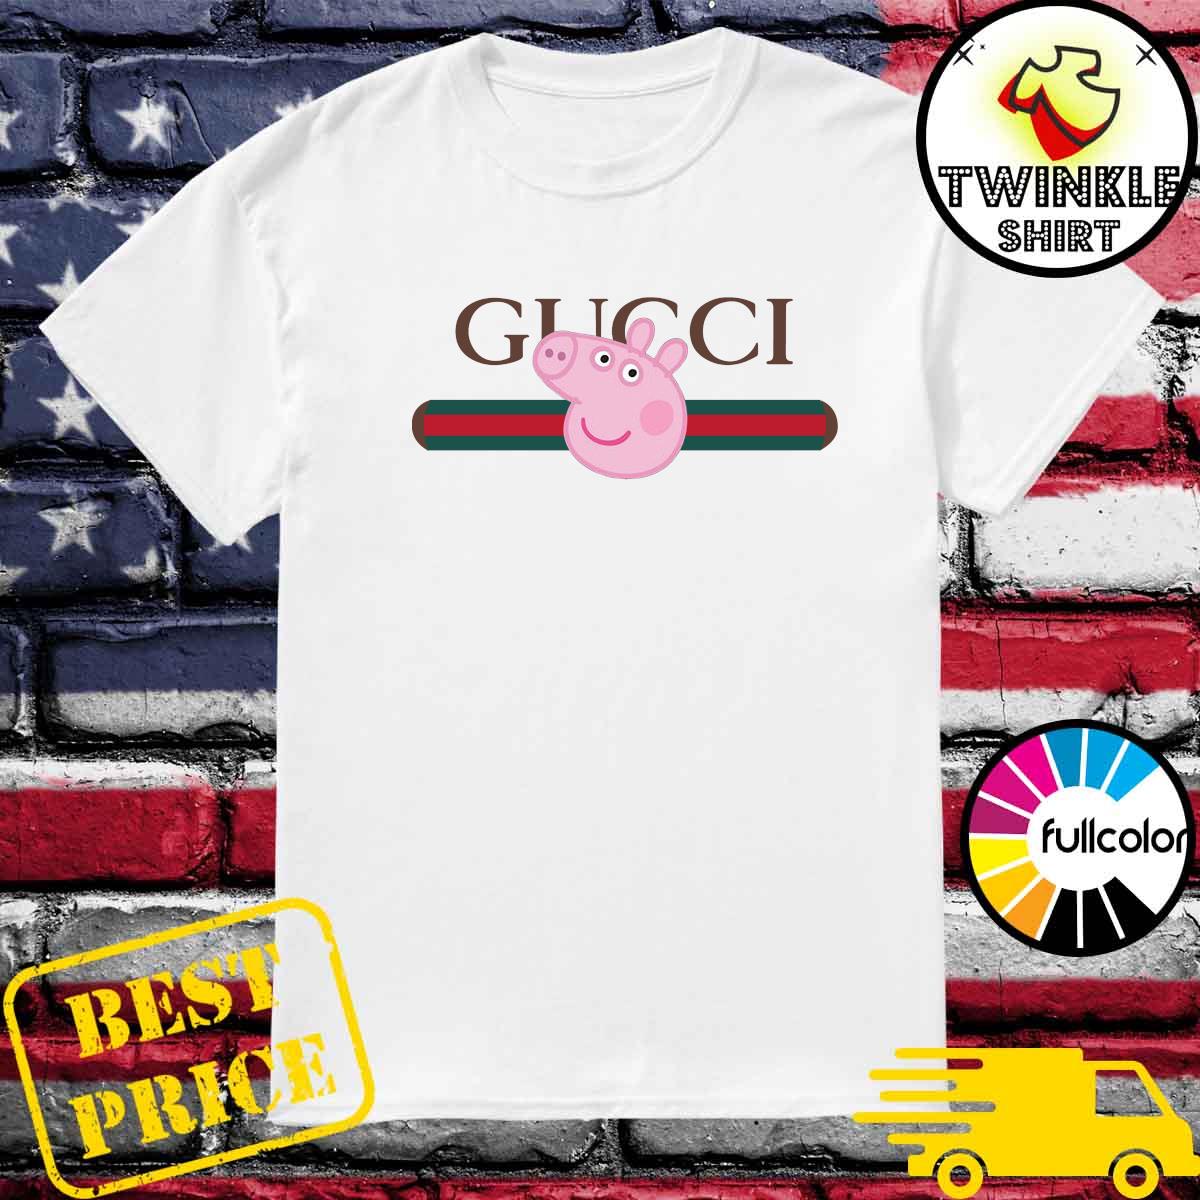 peppa pig gucci shirts